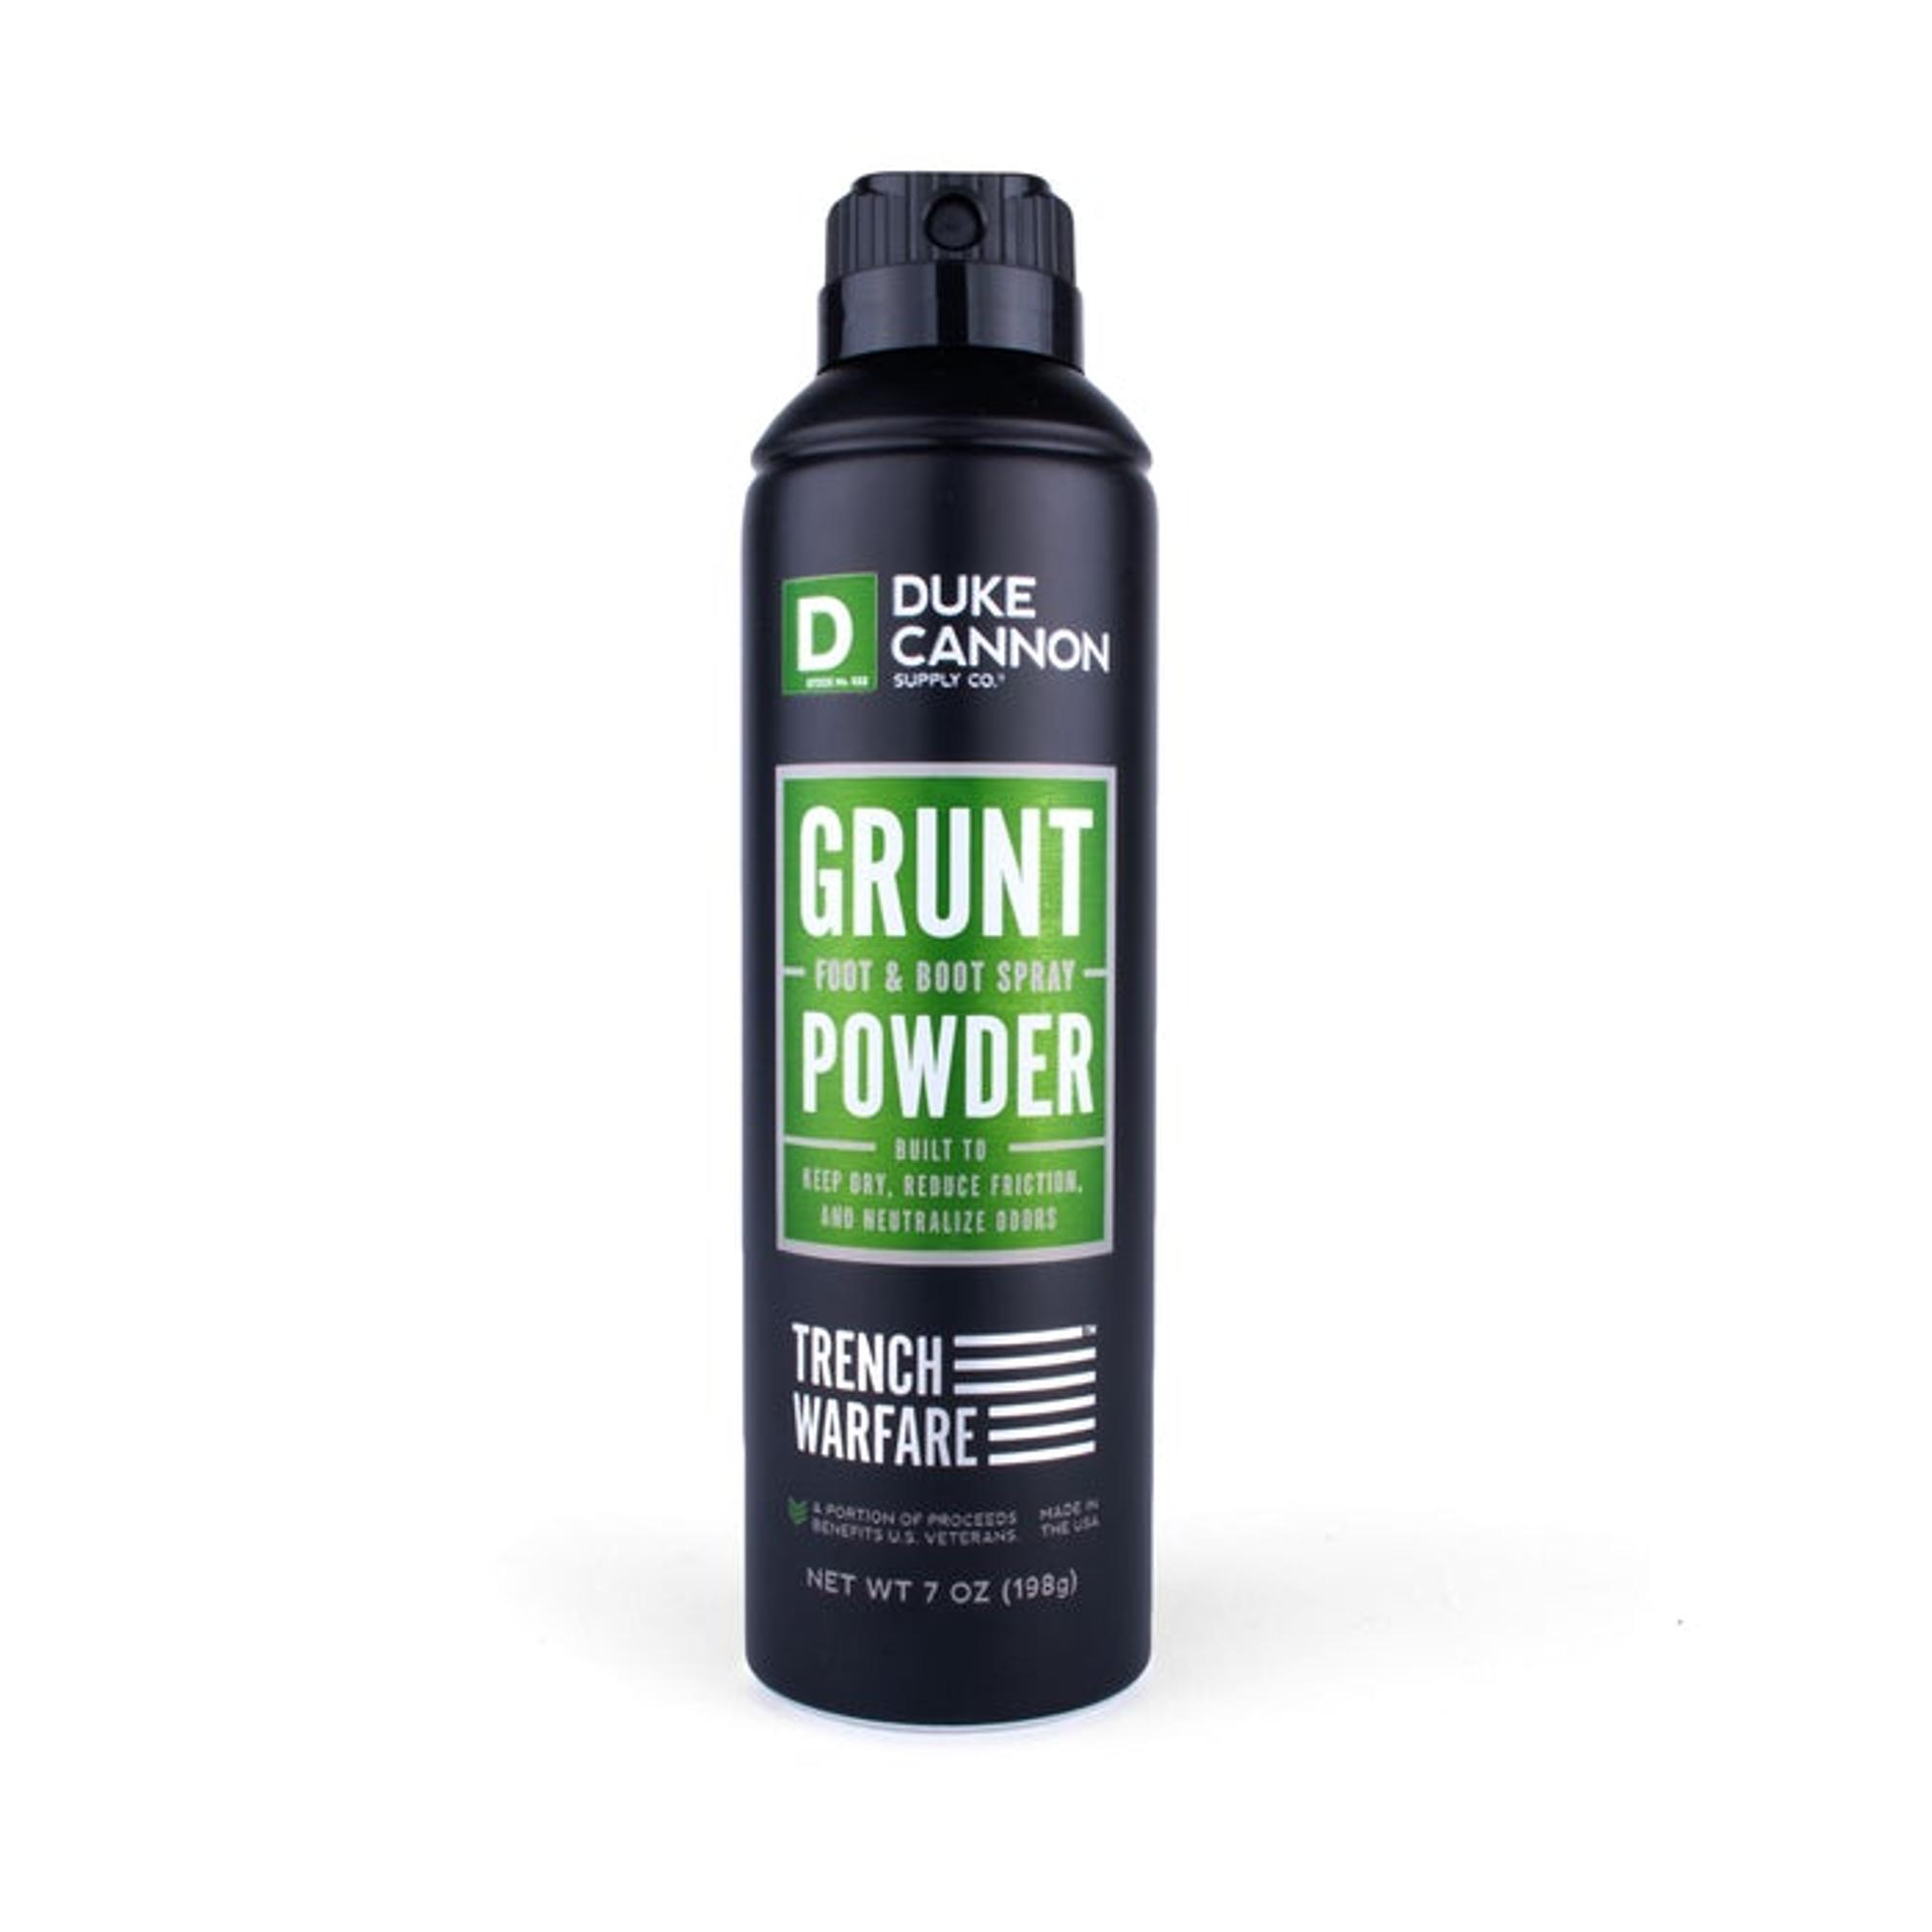 Grunt Foot & Body Spray Powder